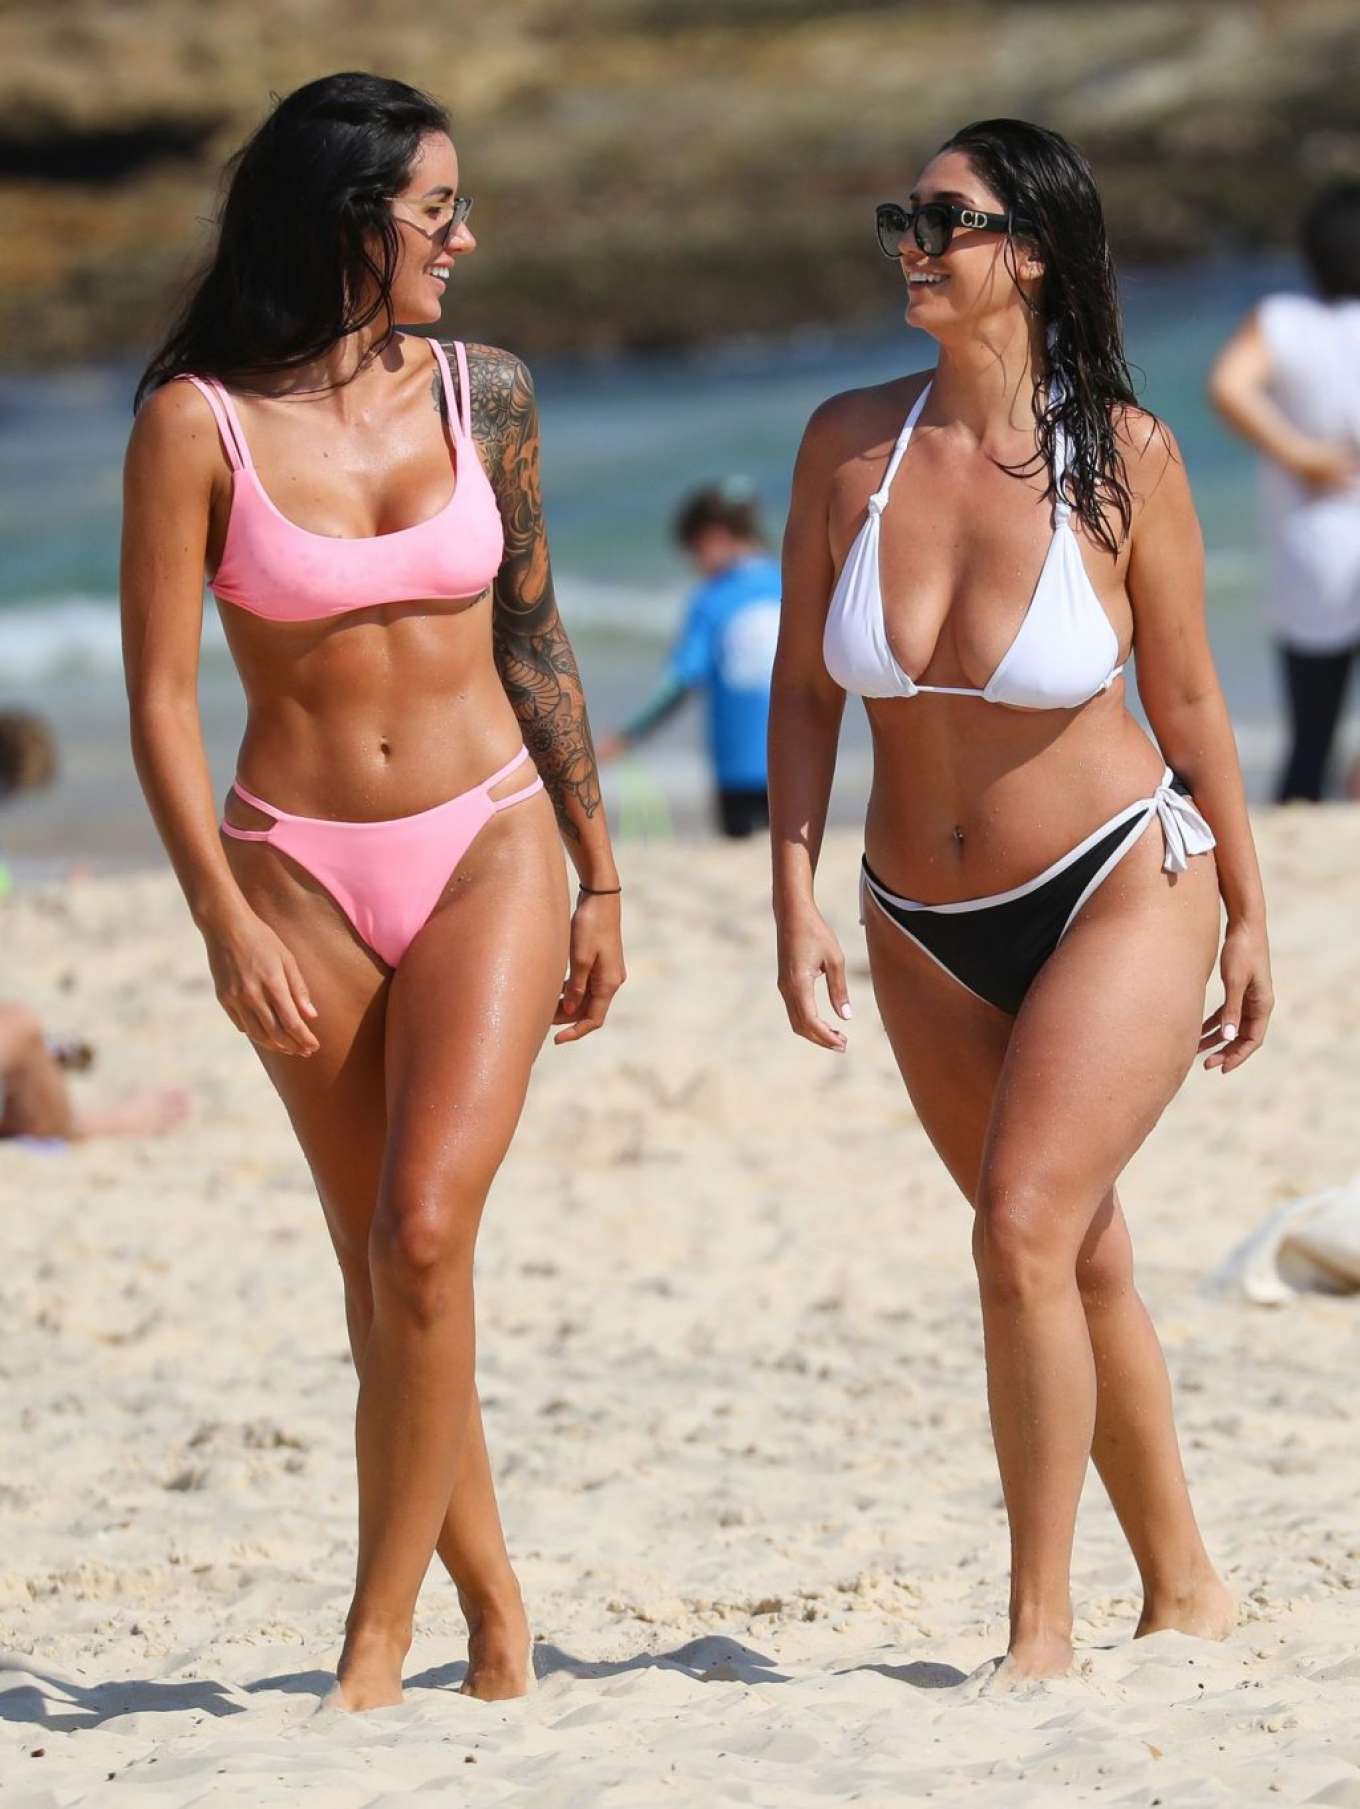 Vanessa Sierra and Sonya Mefaddi in Bikini 2019.